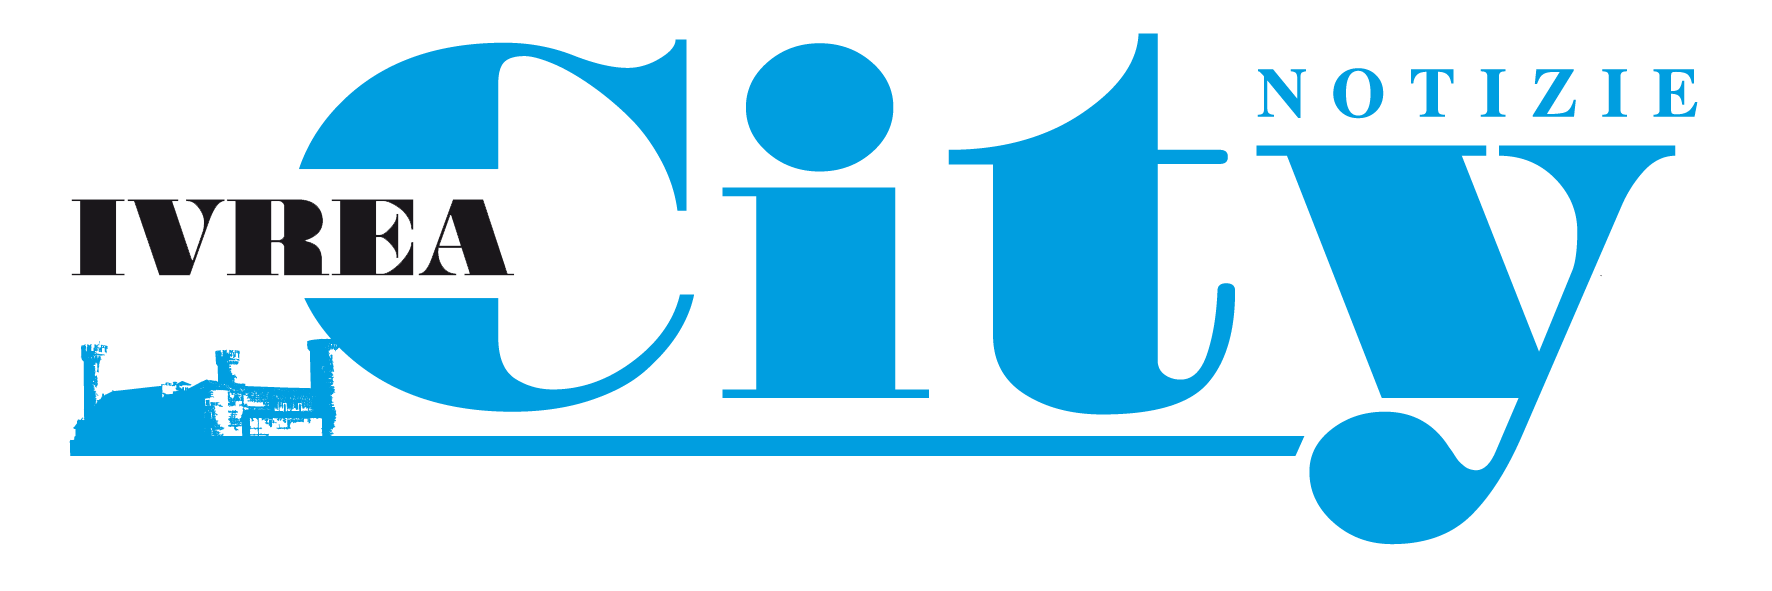 IVREA CITY logo